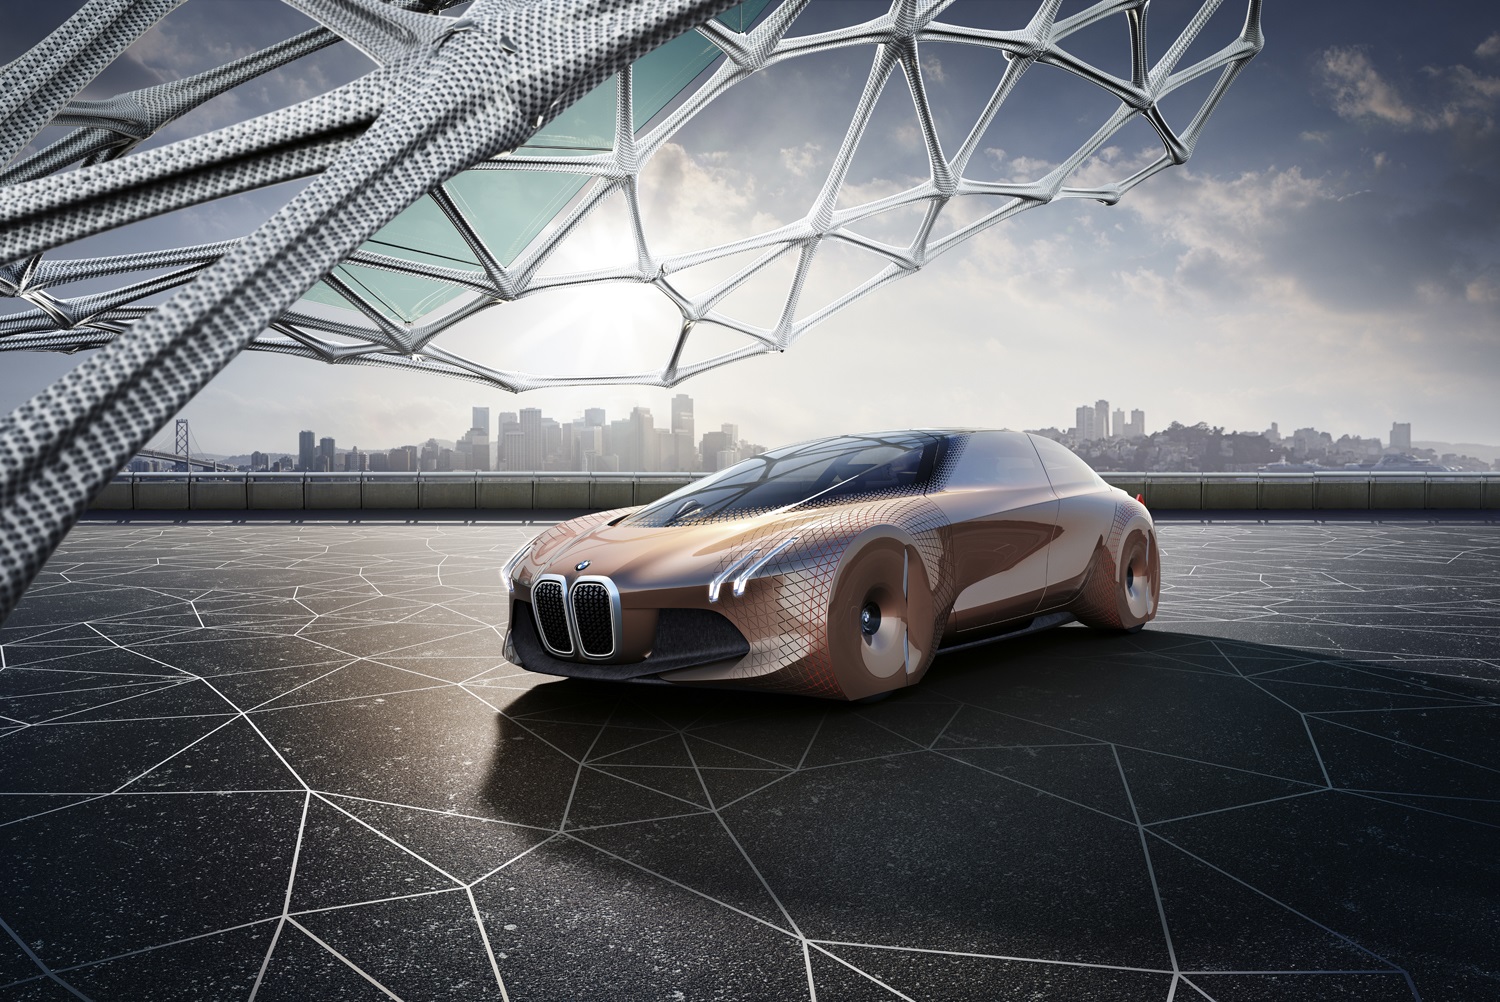 BMW i8 - How It's Made: Dream Cars (Season 2, Episode 13) - Apple TV